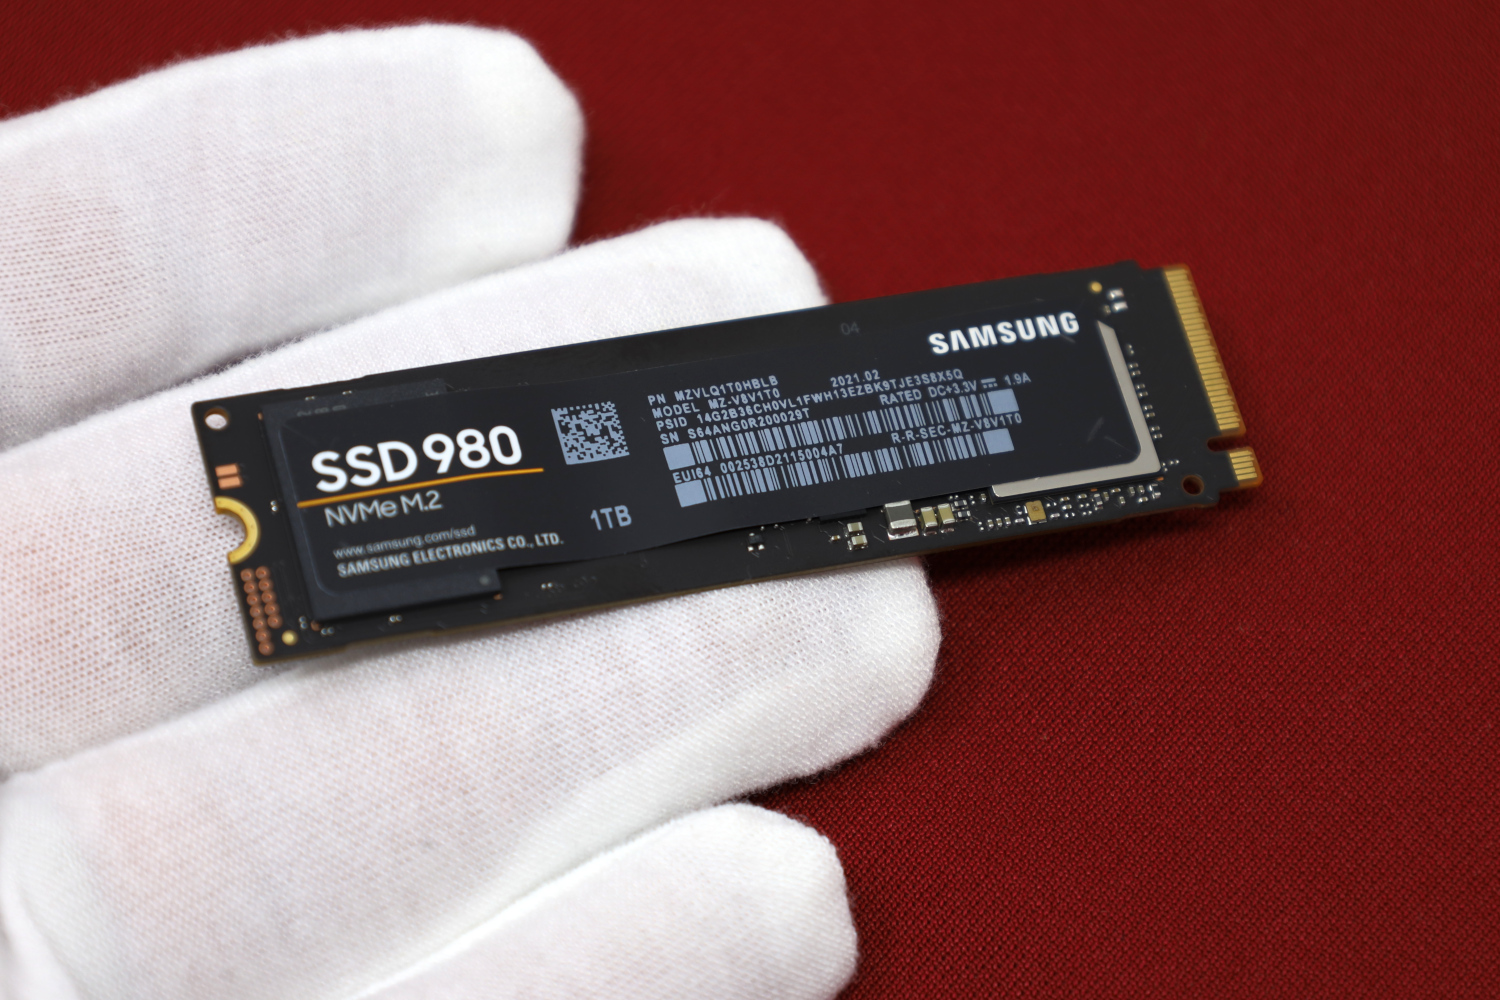 mirakel Pak at lægge Far Samsung 980 1TB DRAM-less NVMe SSD Review - ServeTheHome